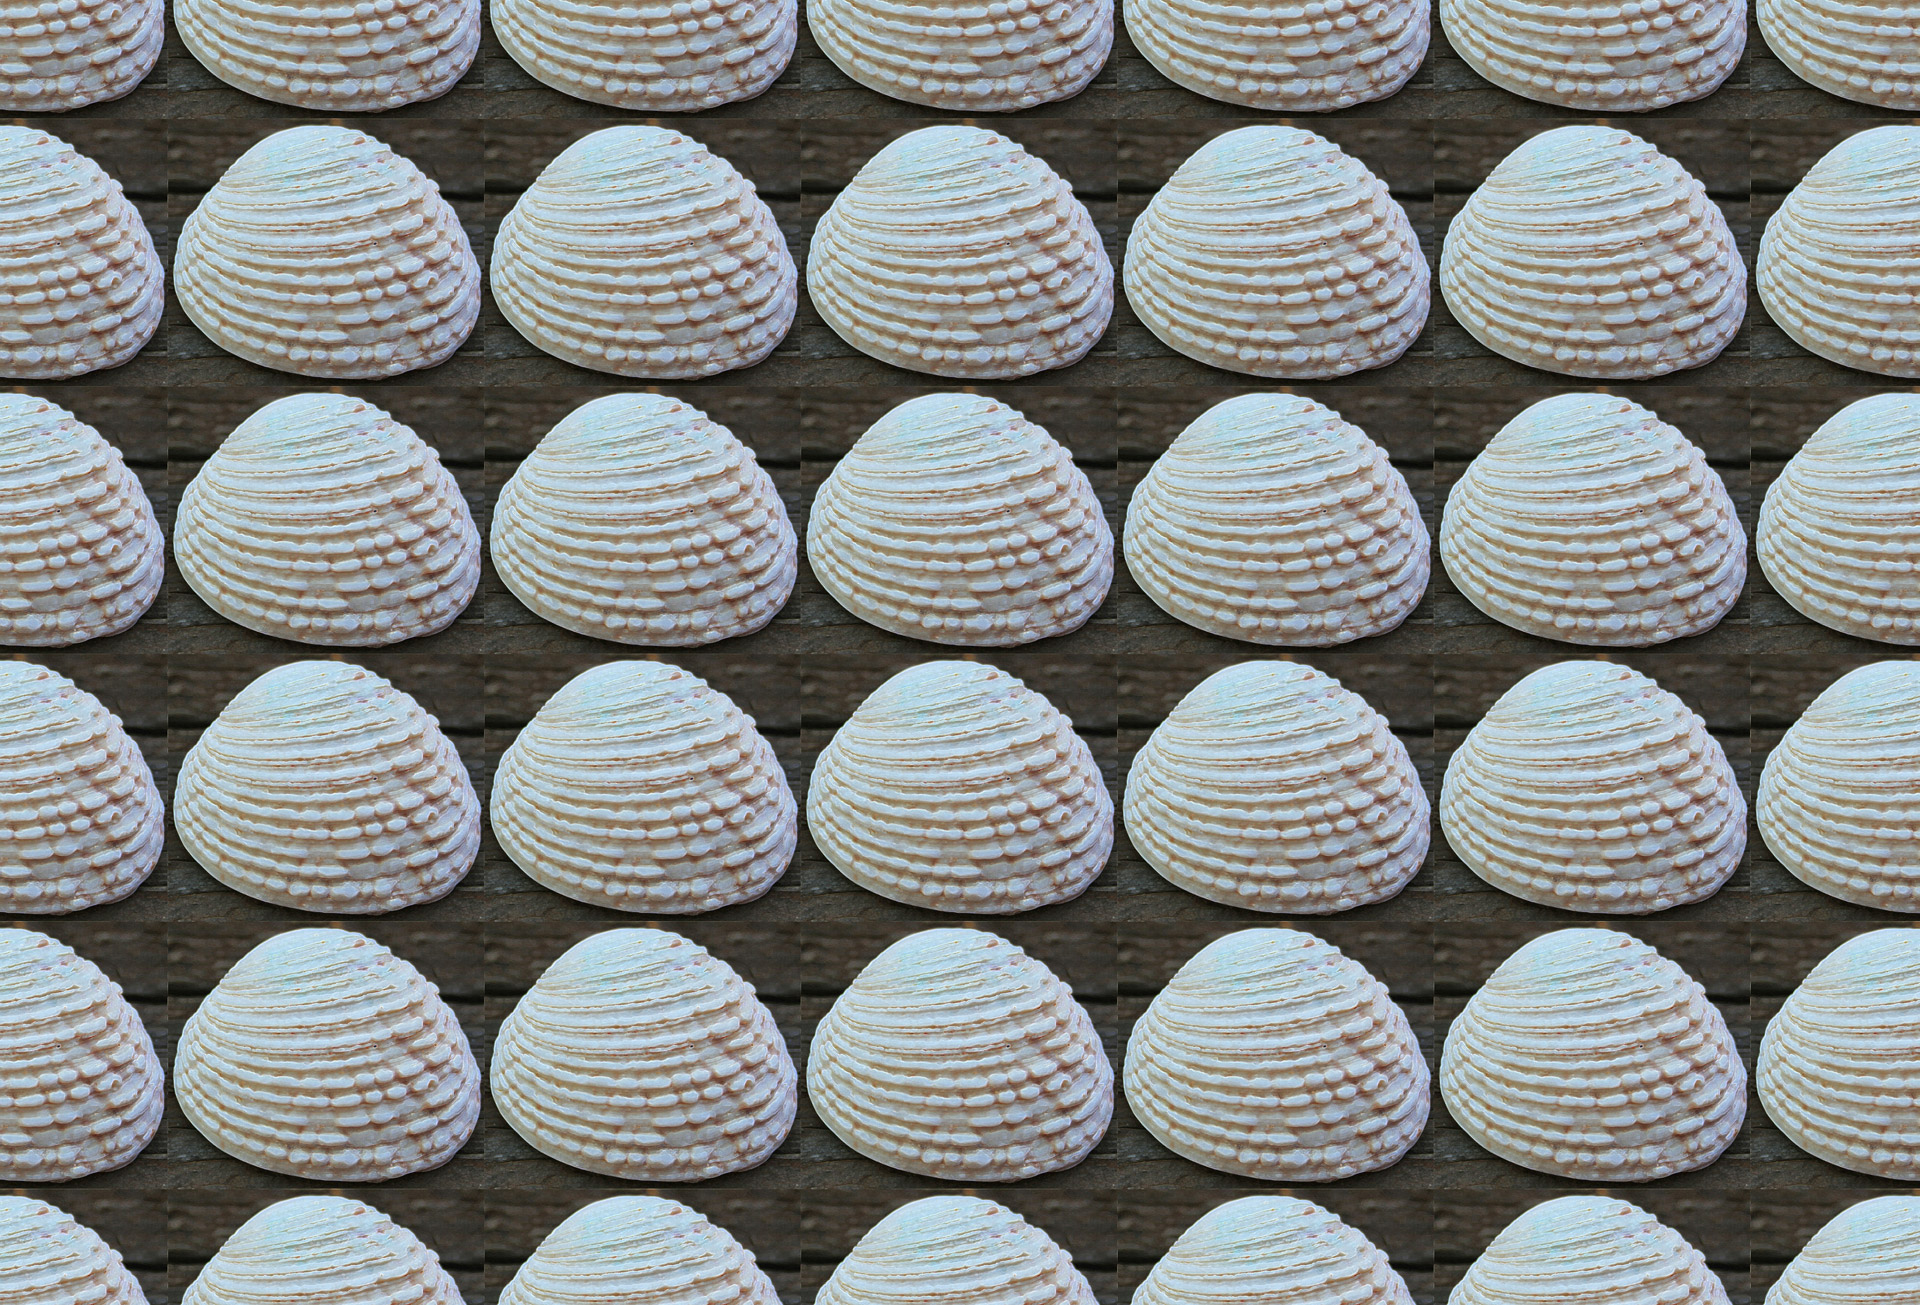 White Clam Shell Wallpaper